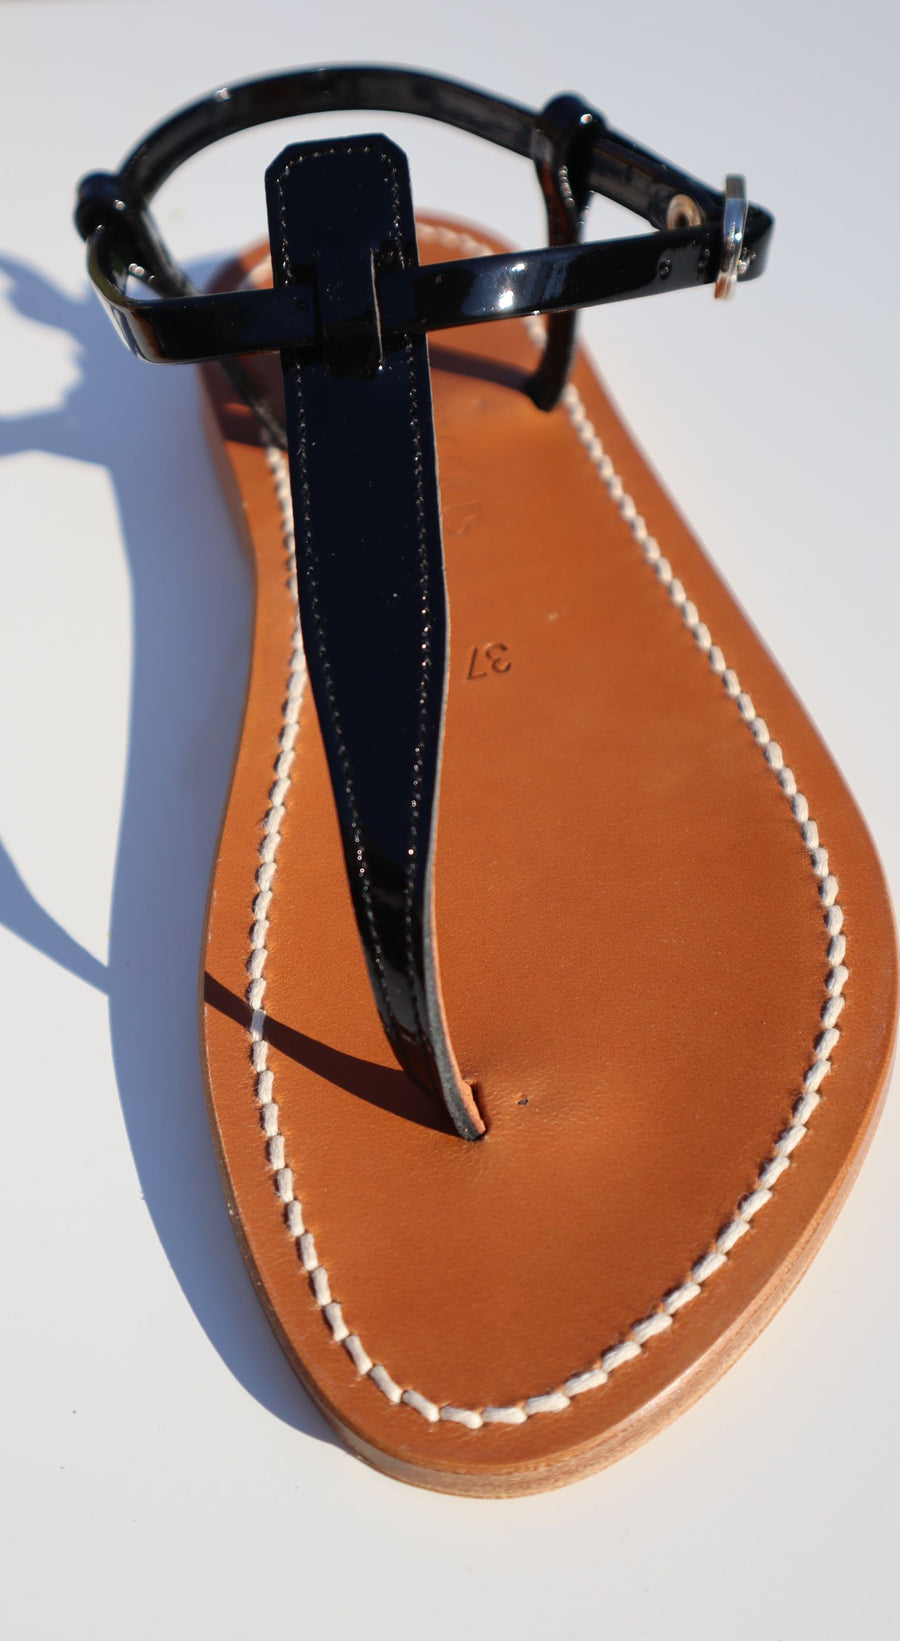 K. JACQUES Picon Sandal in Color: 